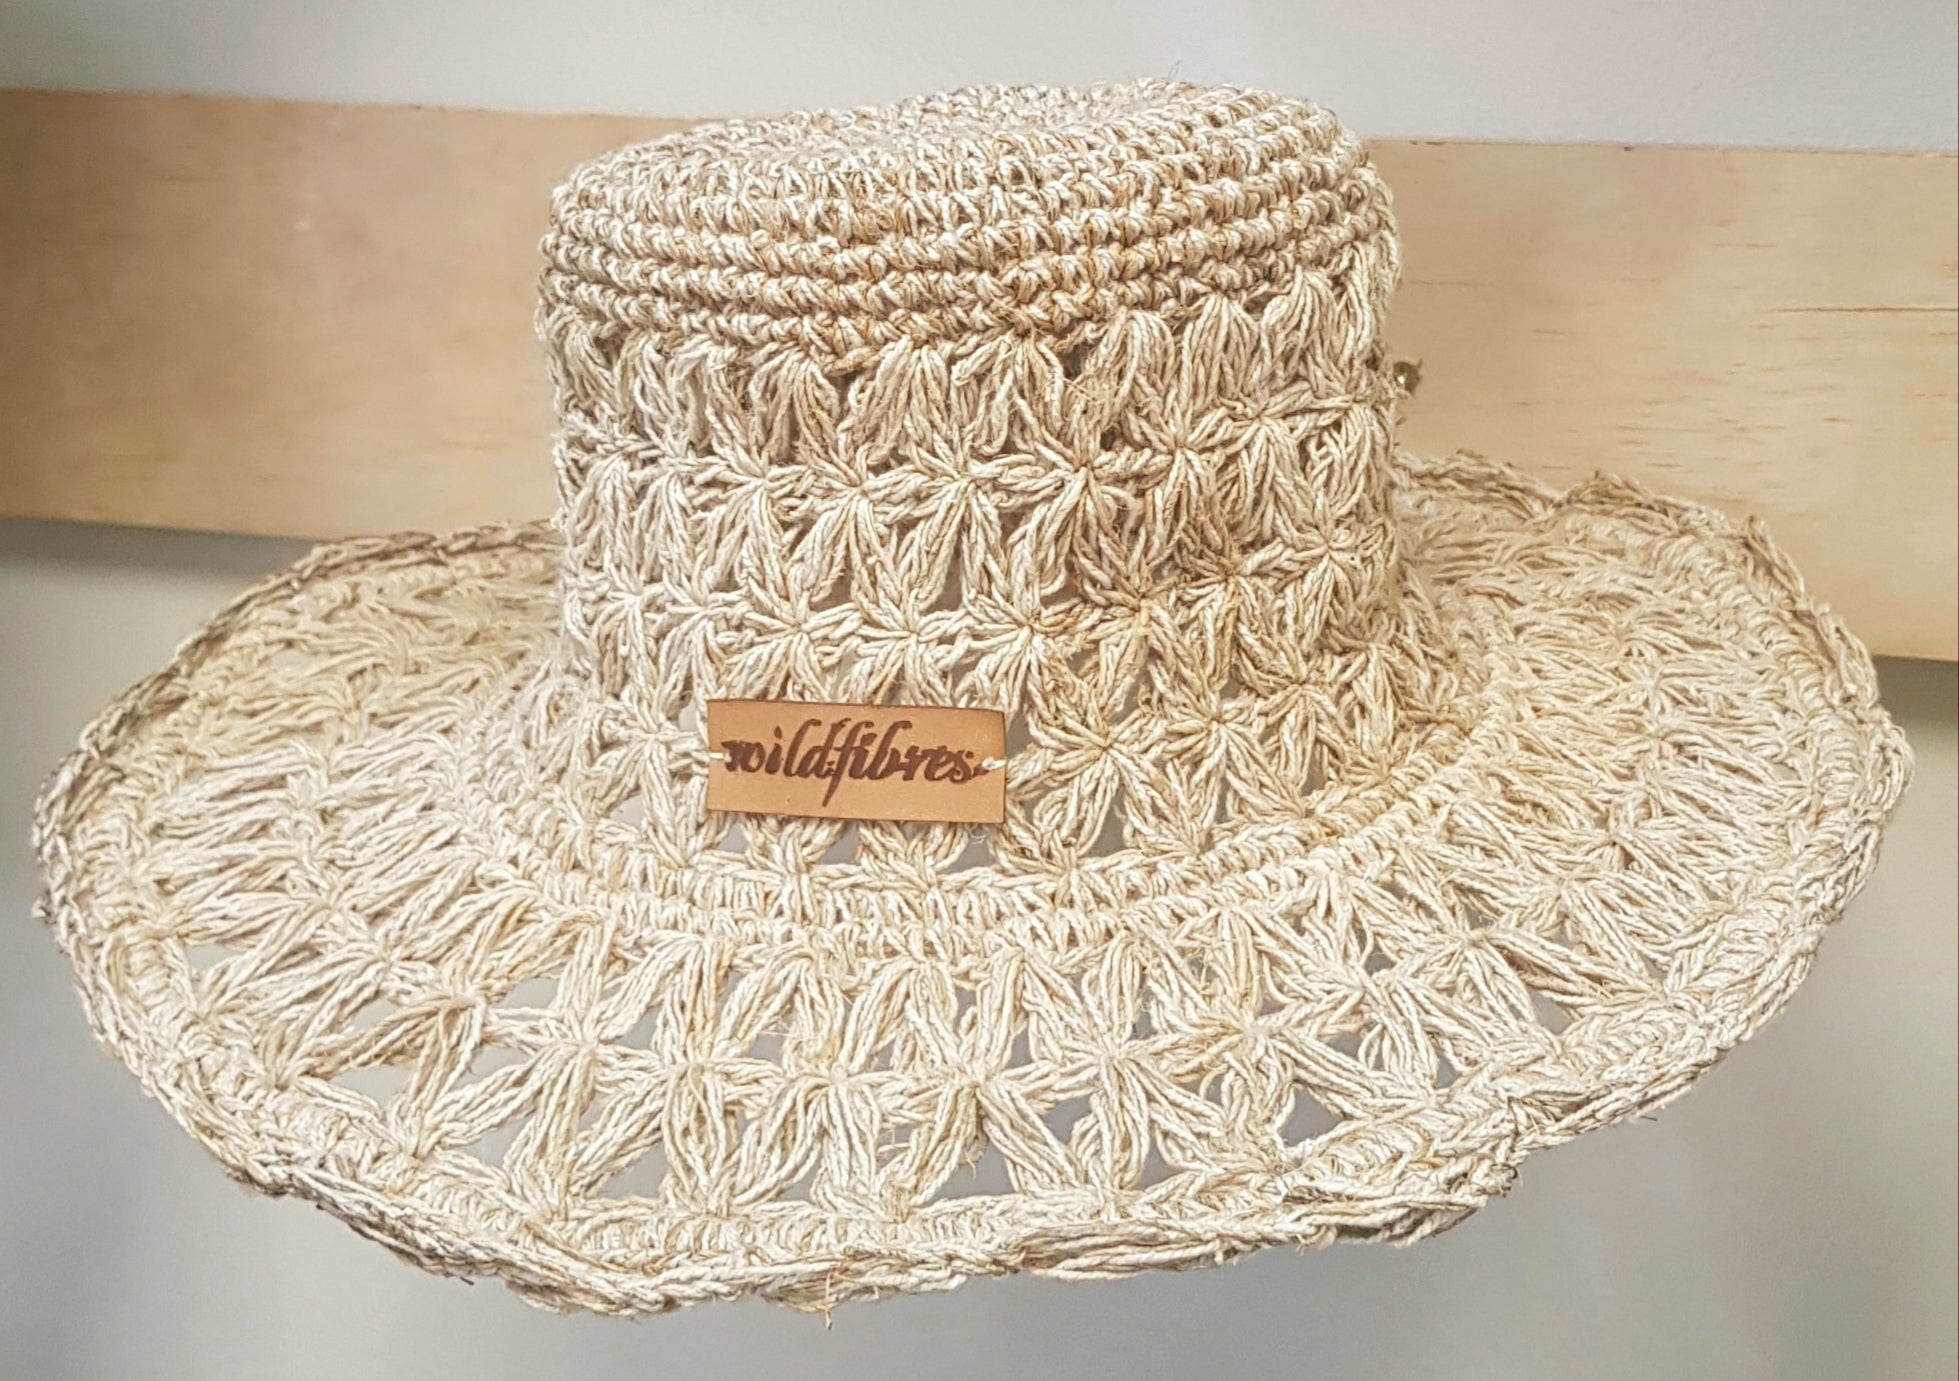 Hand made Crochet hemp hat (small brim)